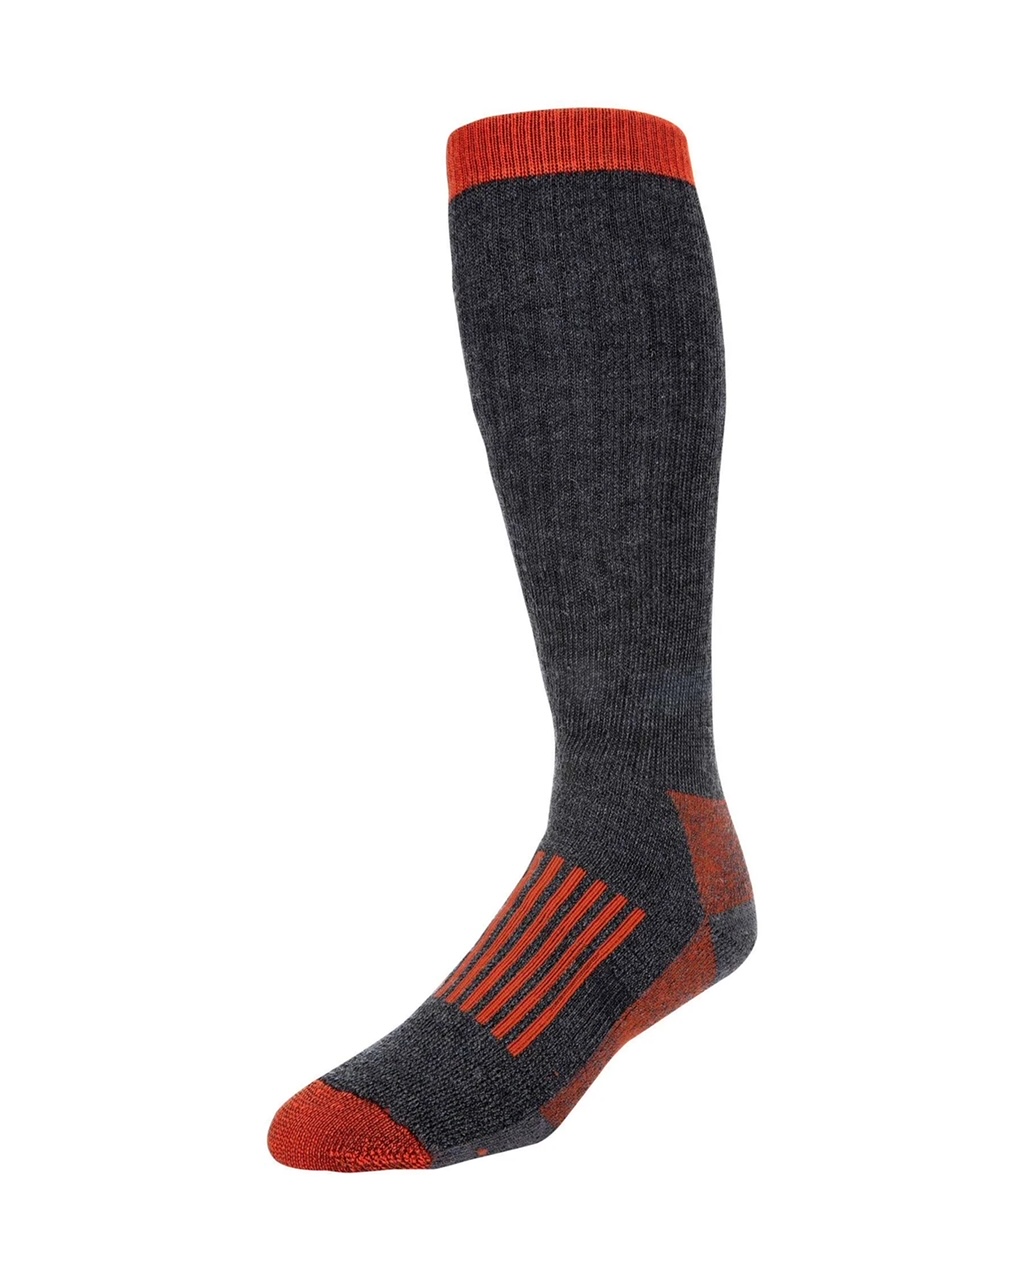 Simms M's Merino Thermal OTC Socks - Medium